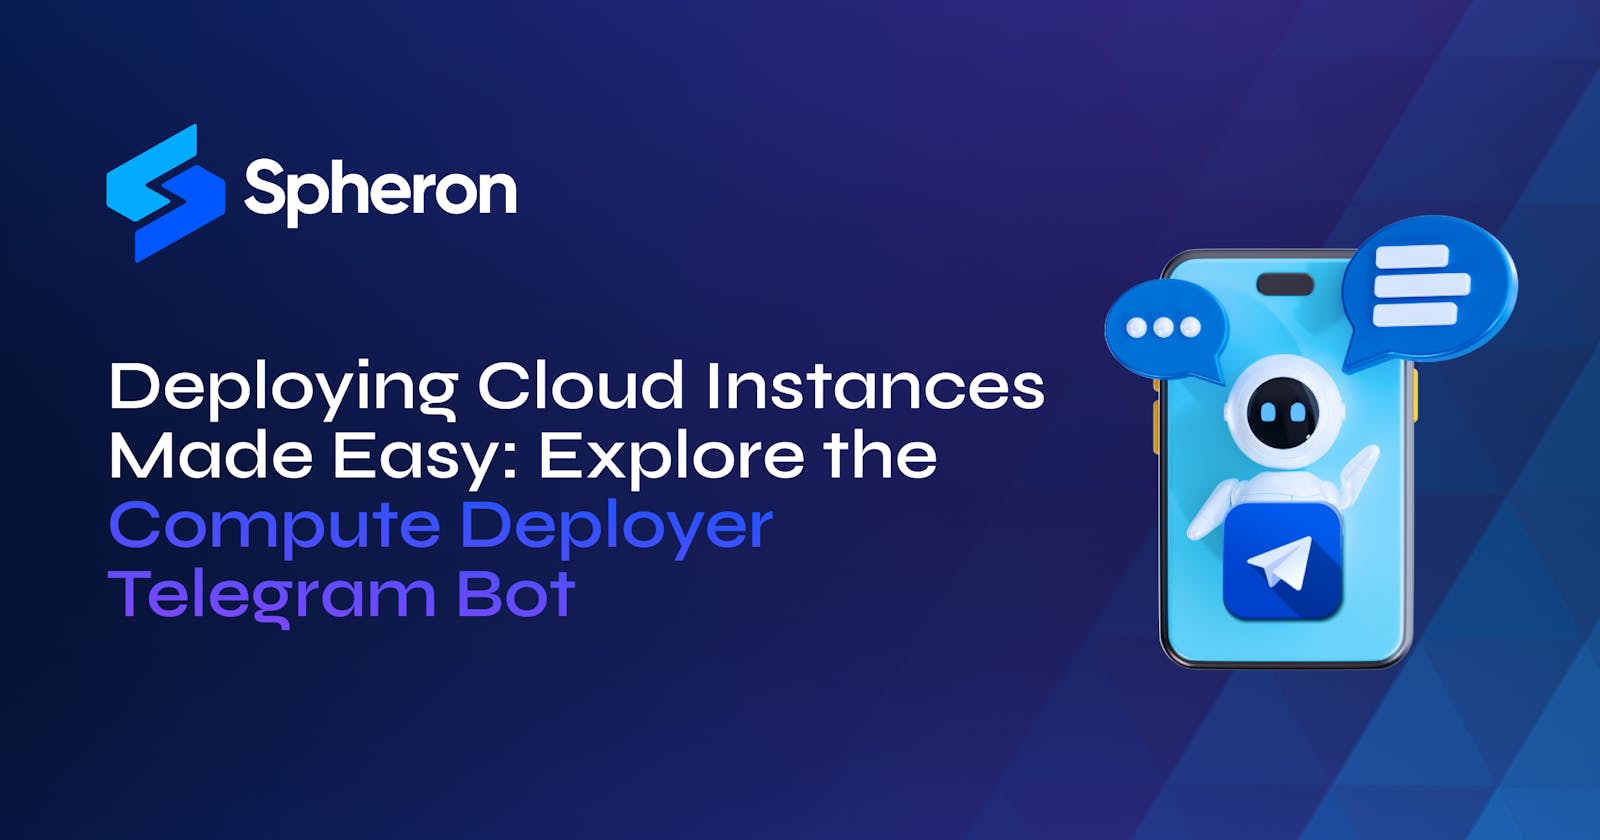 Deploying Cloud Instances Made Easy: Explore the Compute Deployer Telegram Bot